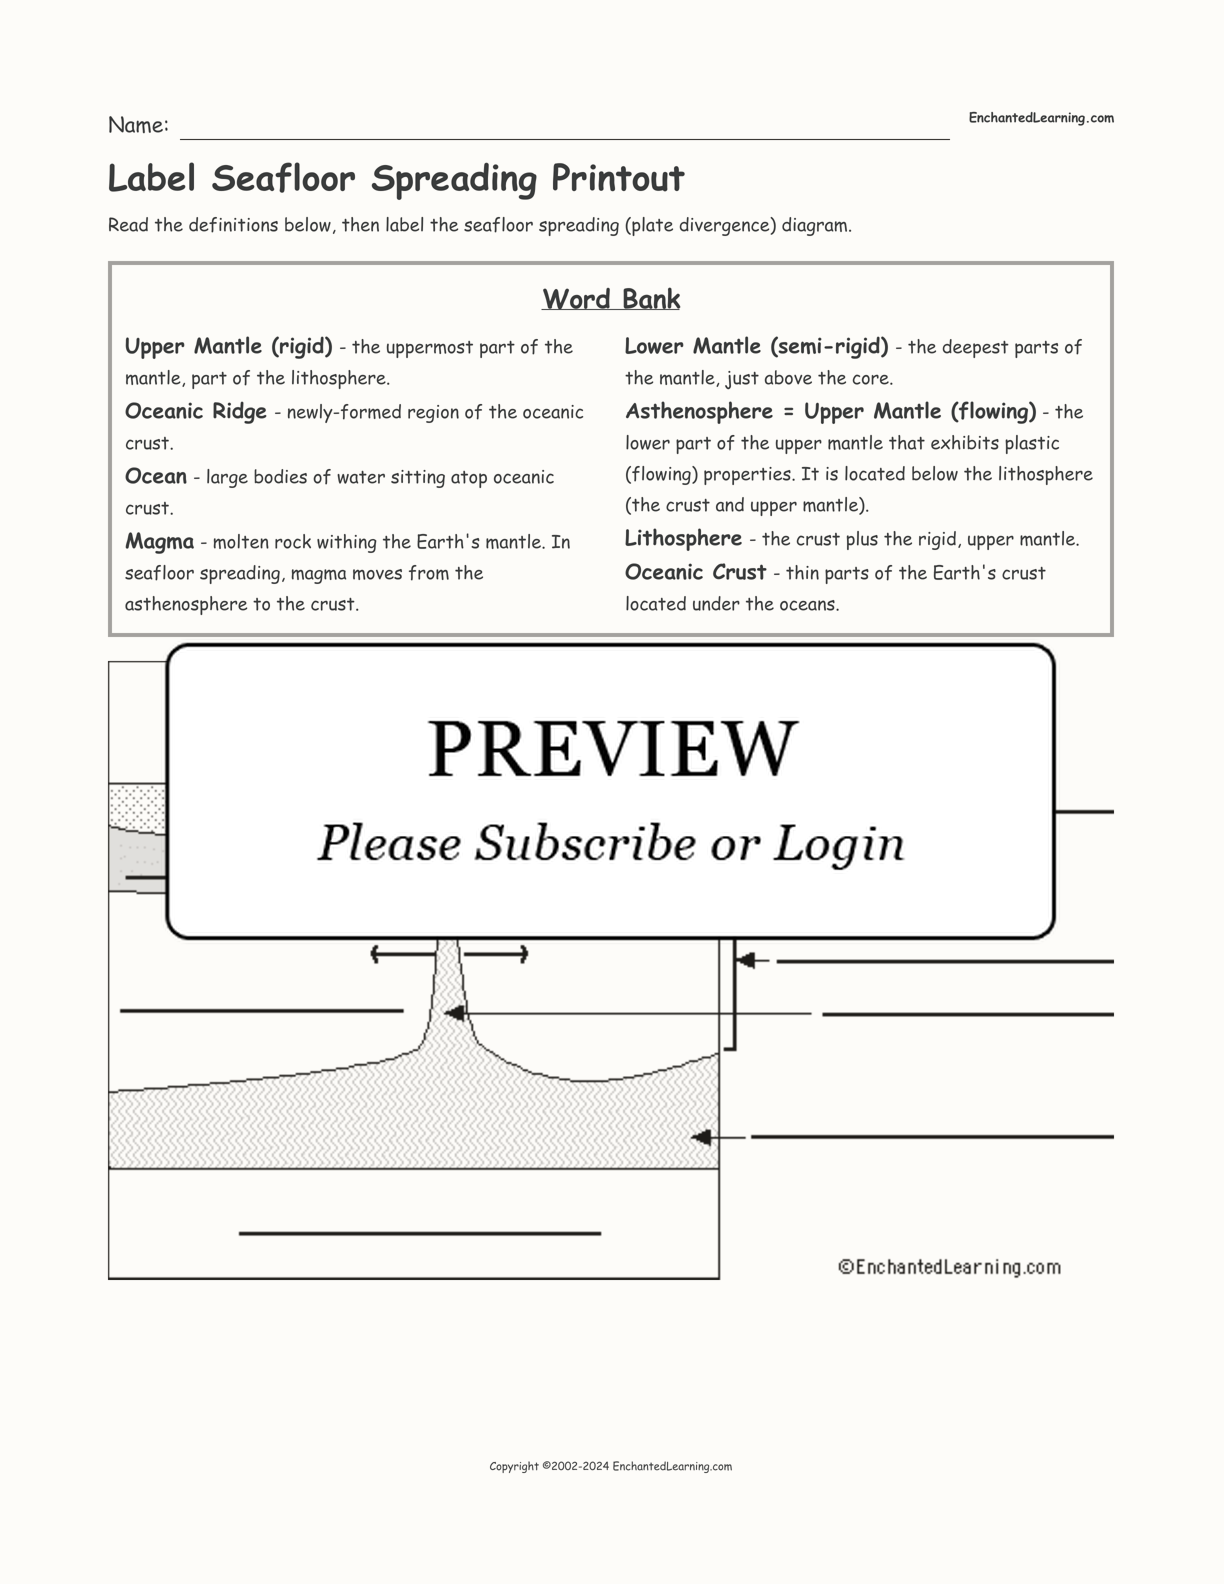 Label Seafloor Spreading Printout interactive worksheet page 1